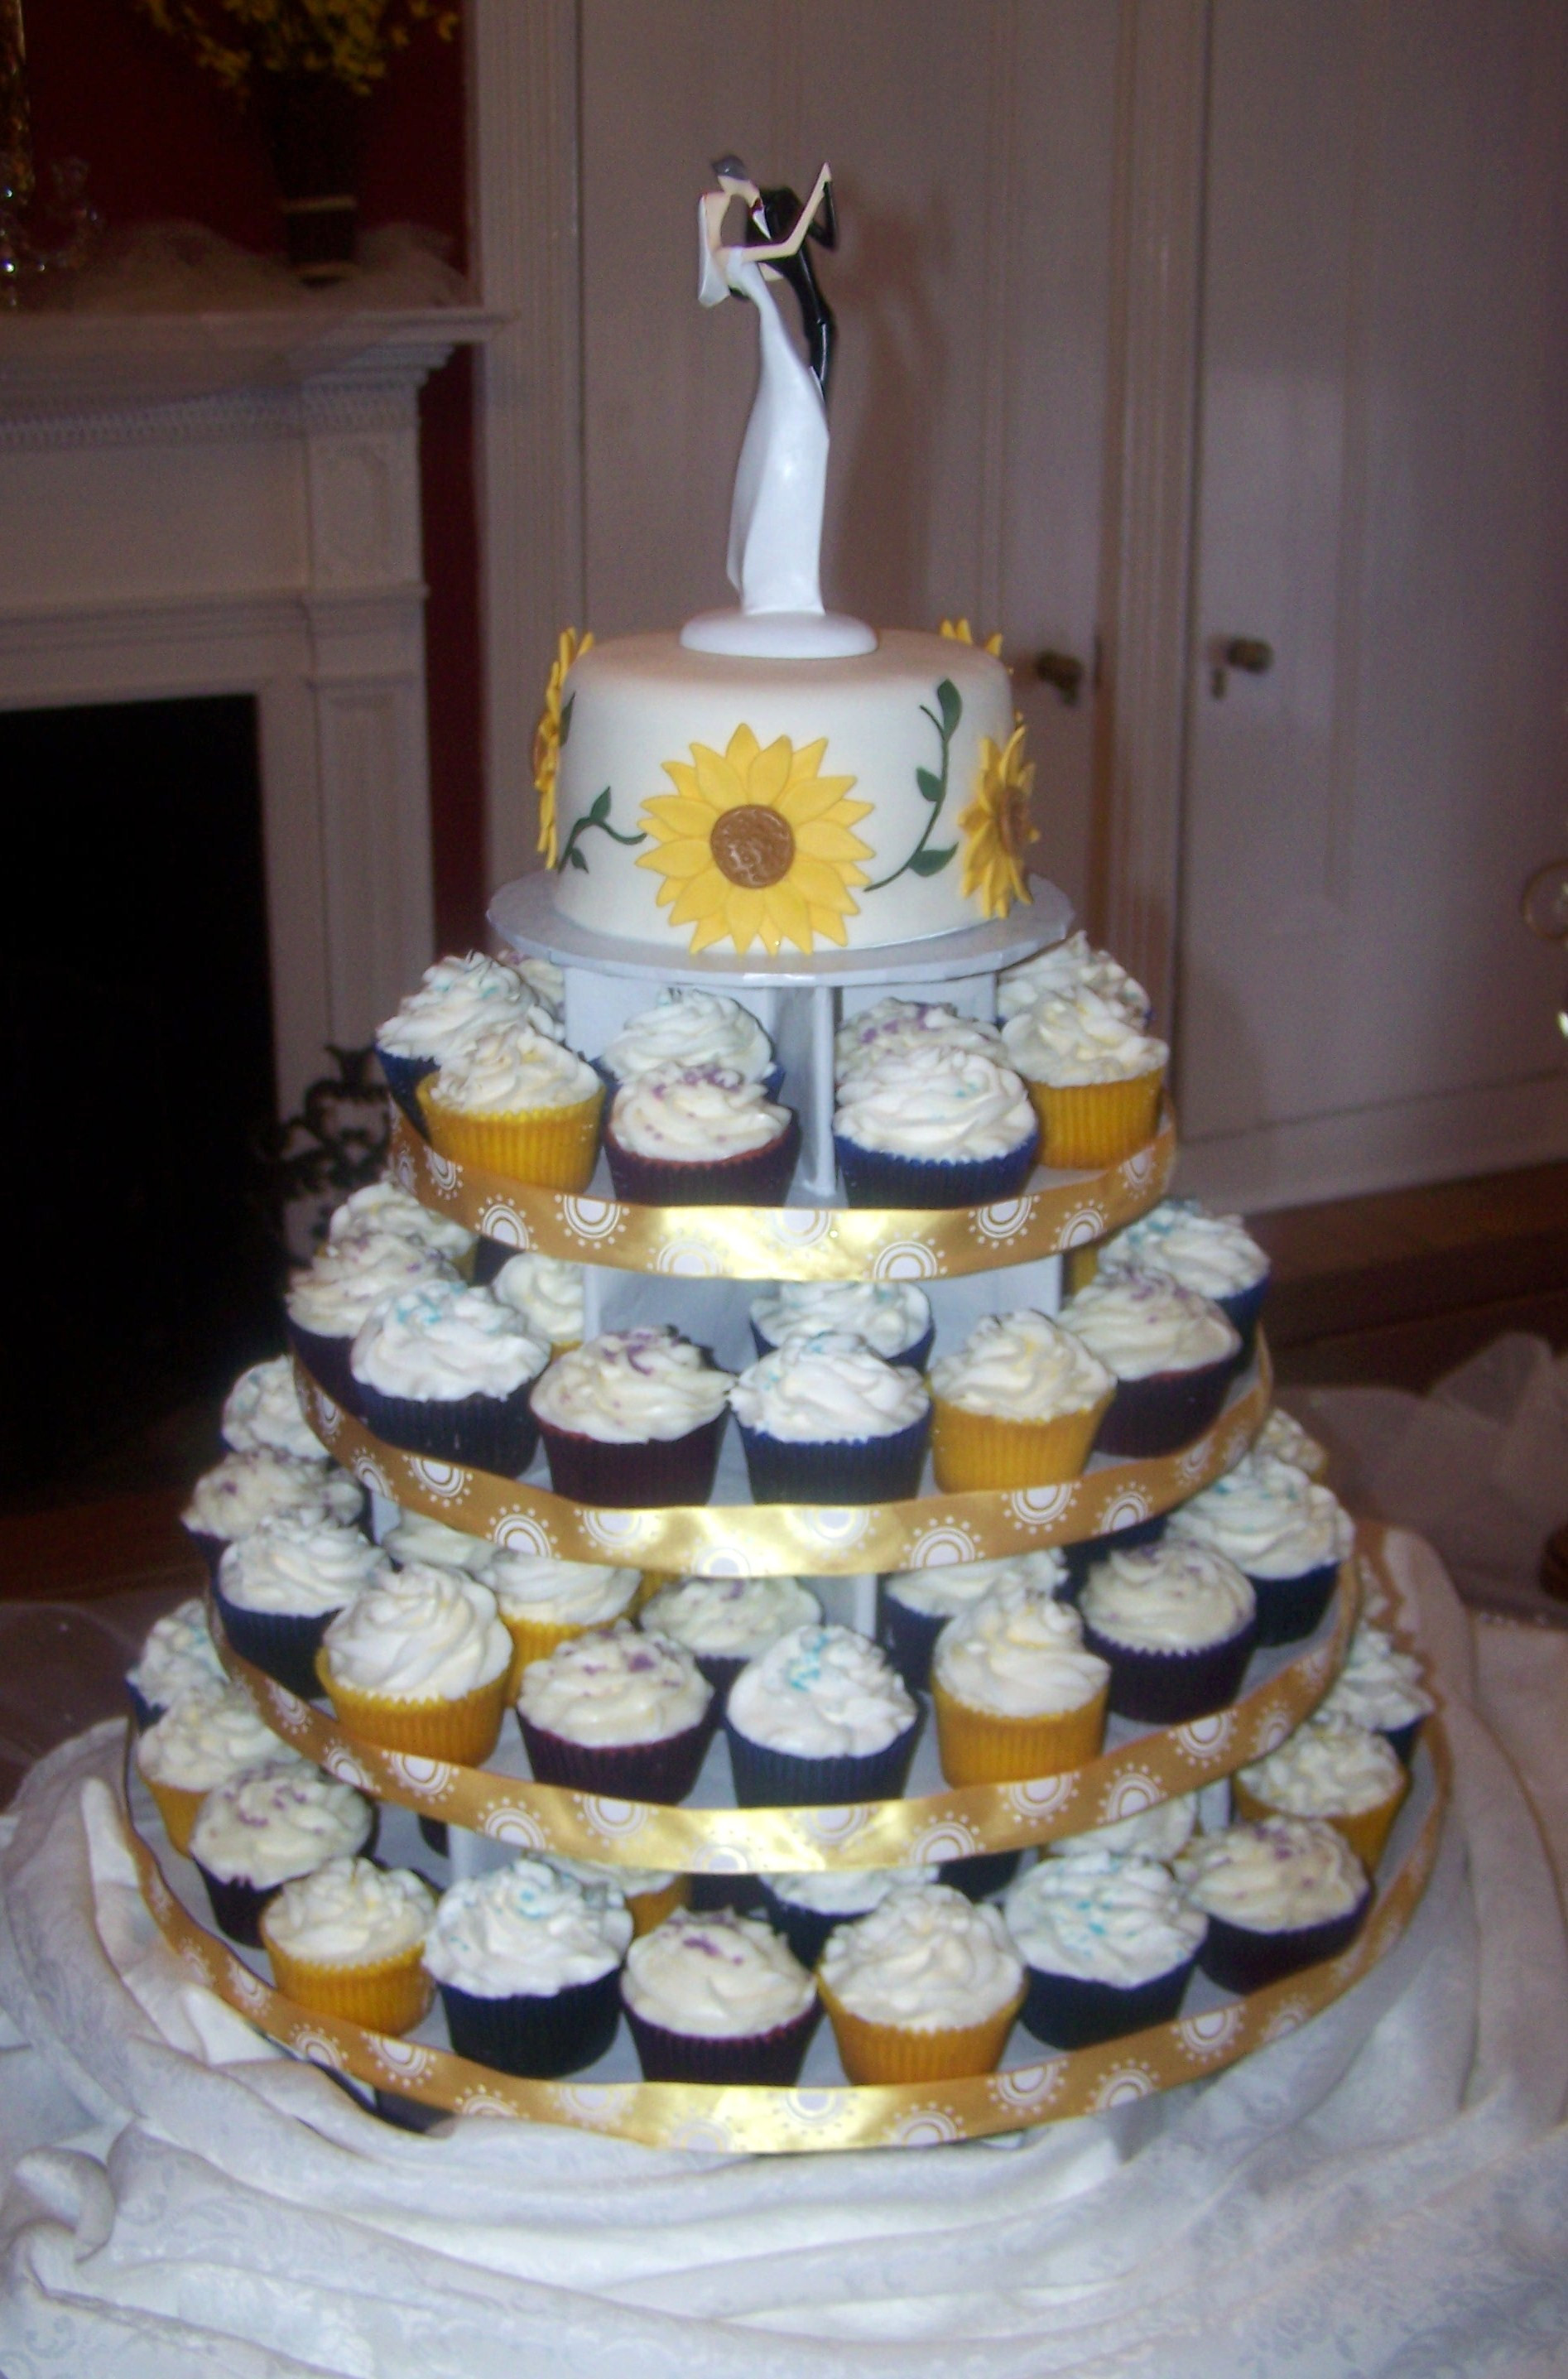 Wedding Cake With Cupcakes
 Wedding Cakes & Groom’s Cakes Beth Ann s